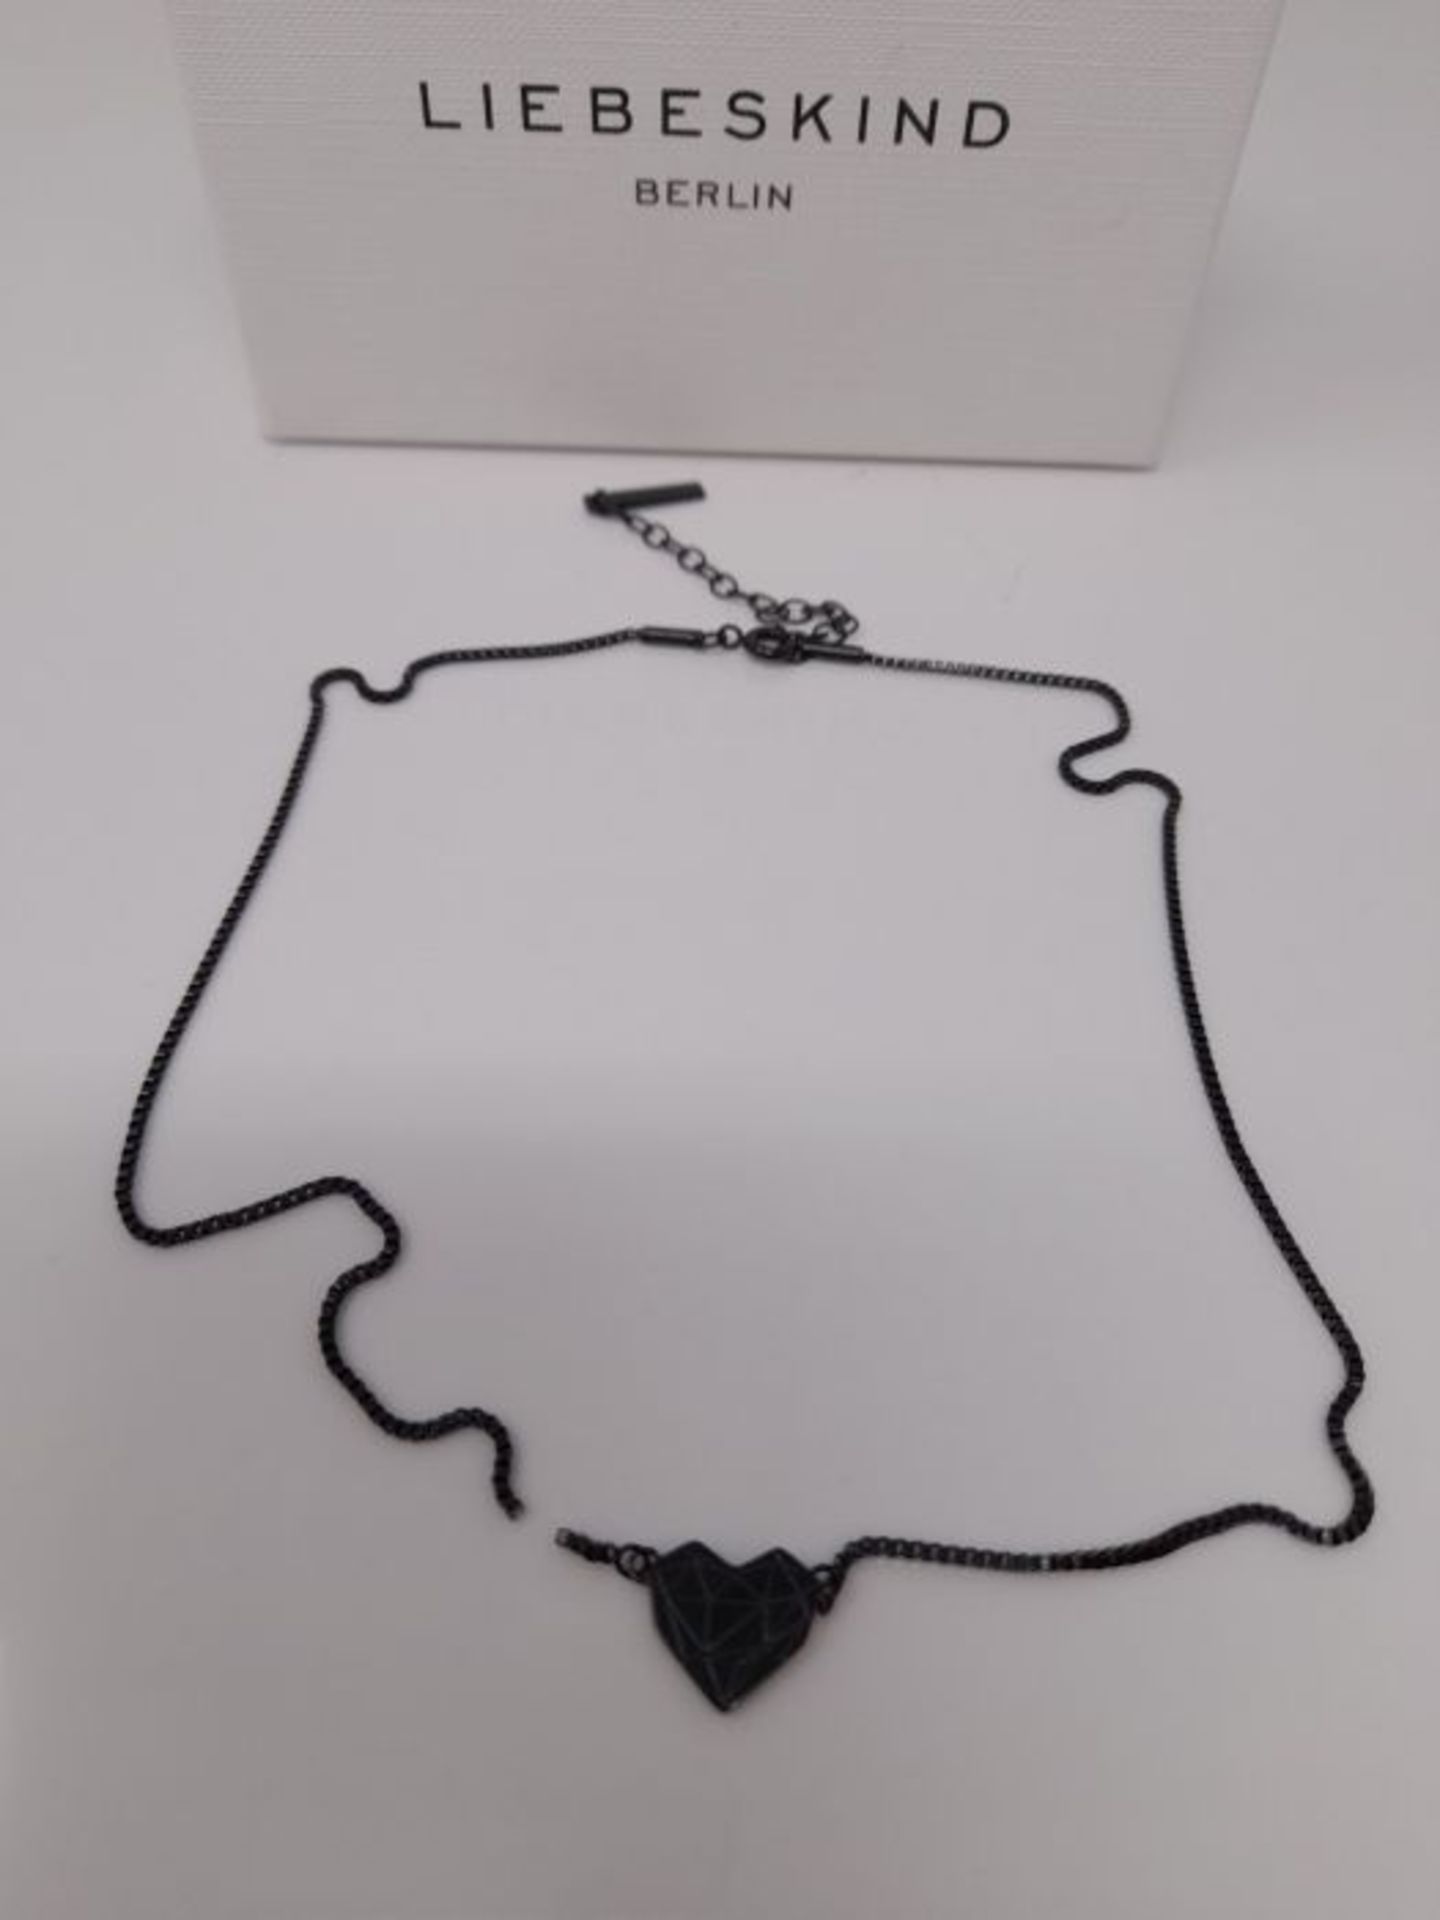 [CRACKED] Liebeskind Berlin LJ-0331-N-V 40 Women's Necklace Stainless Steel Black - Image 3 of 3